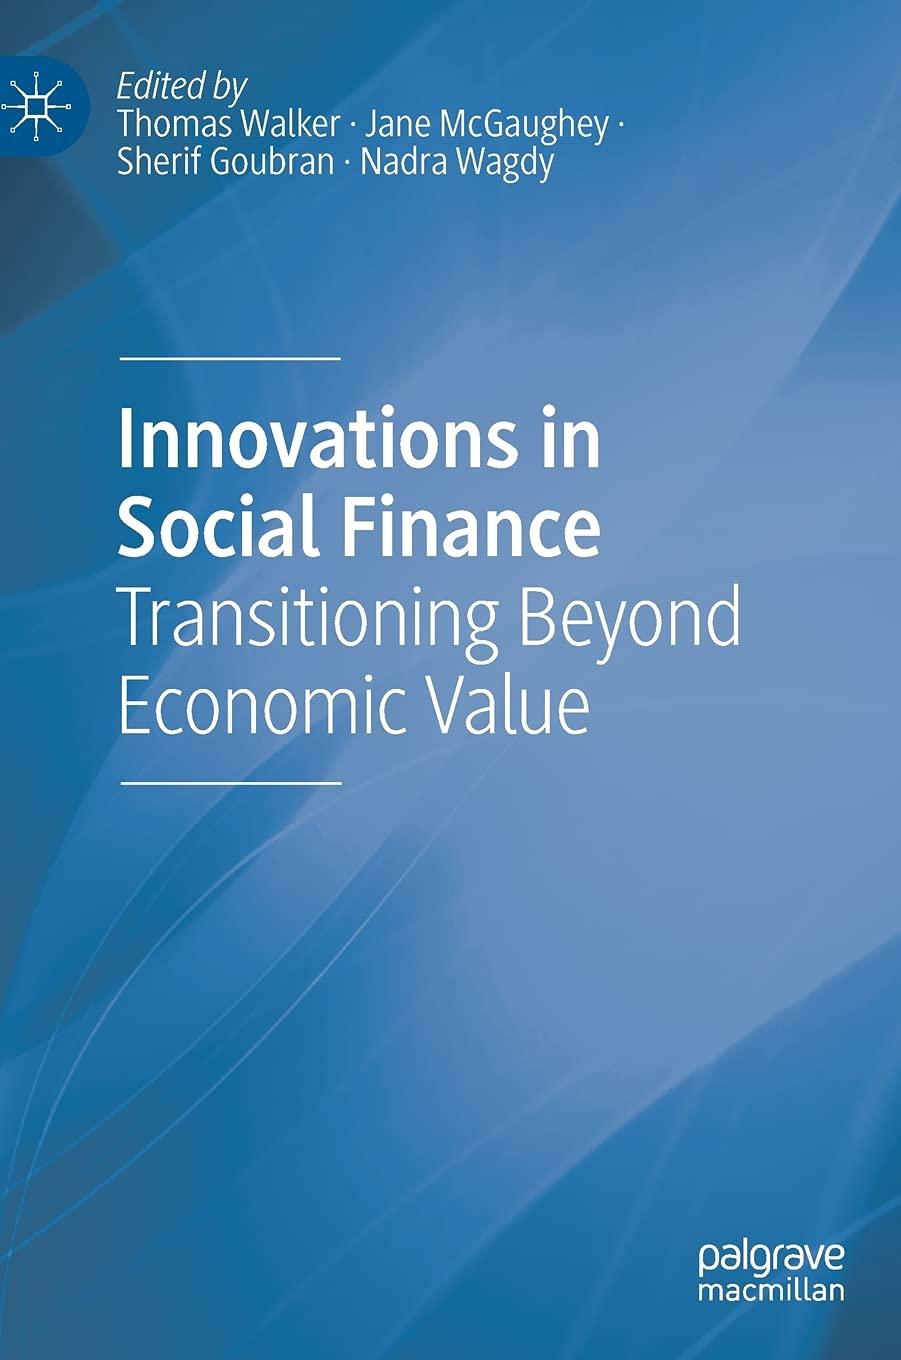 innovations in social finance transitioning beyond economic value 1st edition thomas walker, jane mcgaughey,